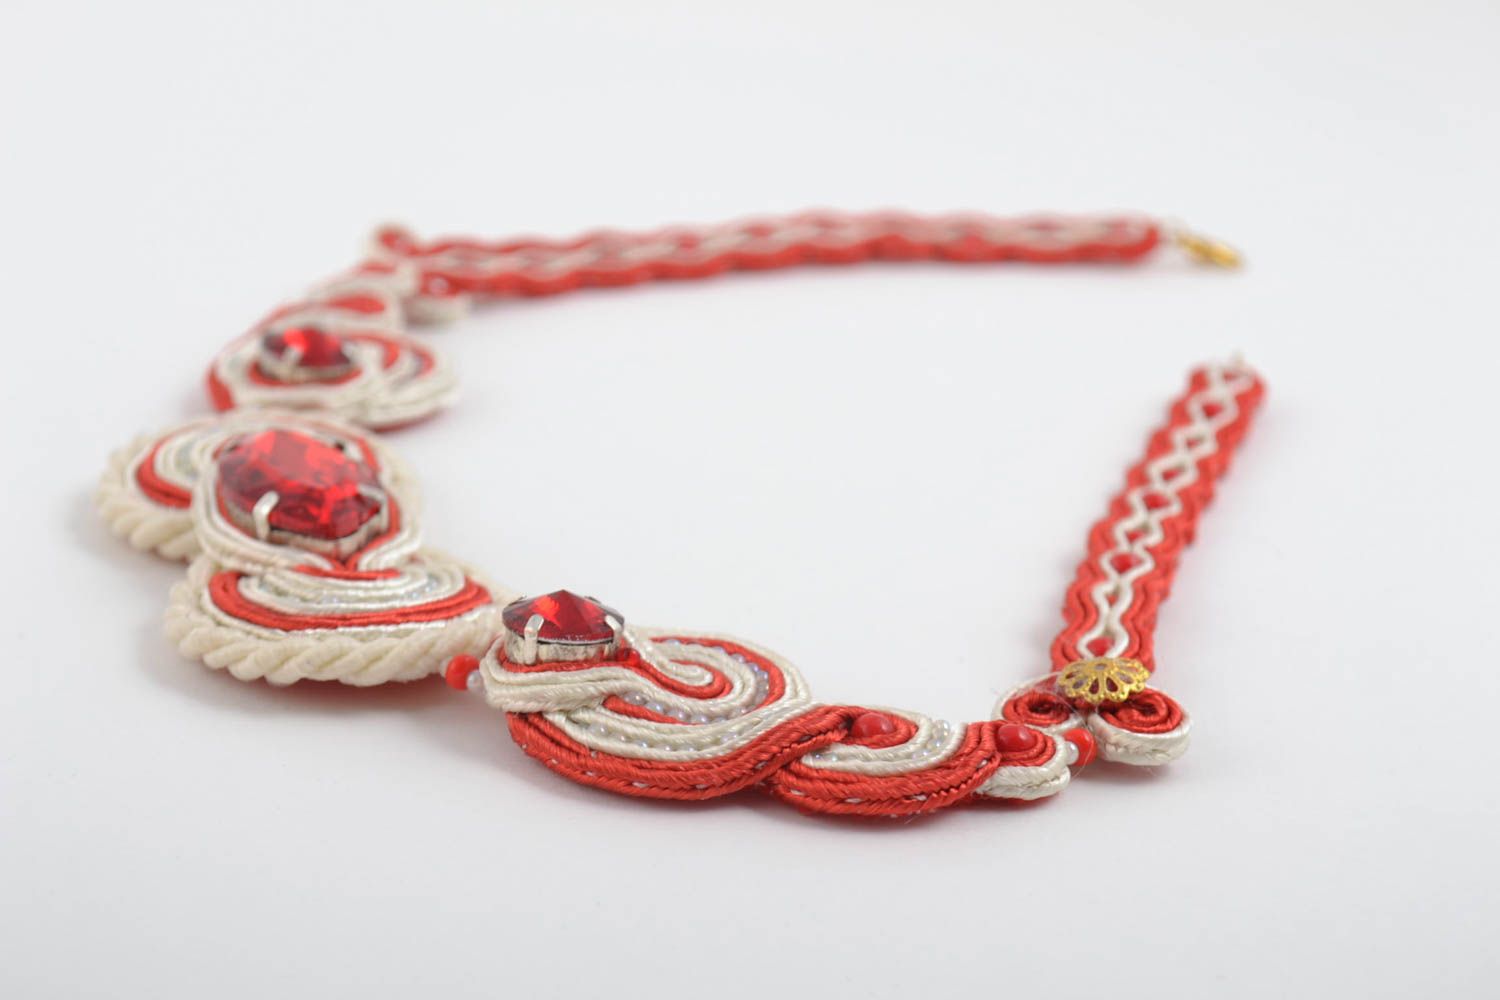 Beautiful handmade soutache necklace evening jewelry designs cool jewelry photo 1